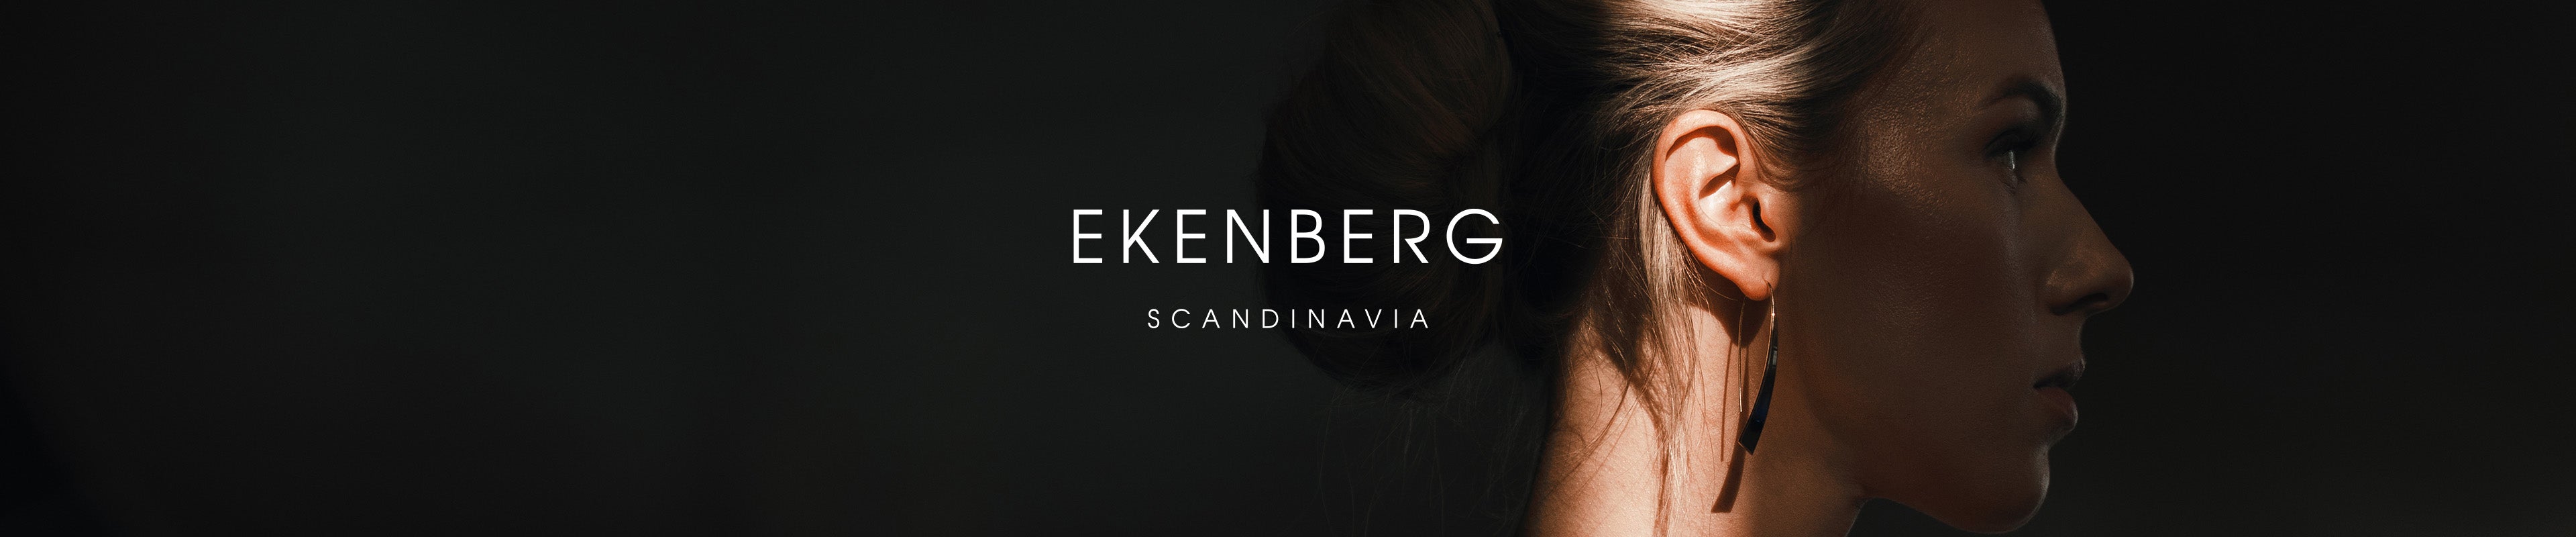 ekenberg banner